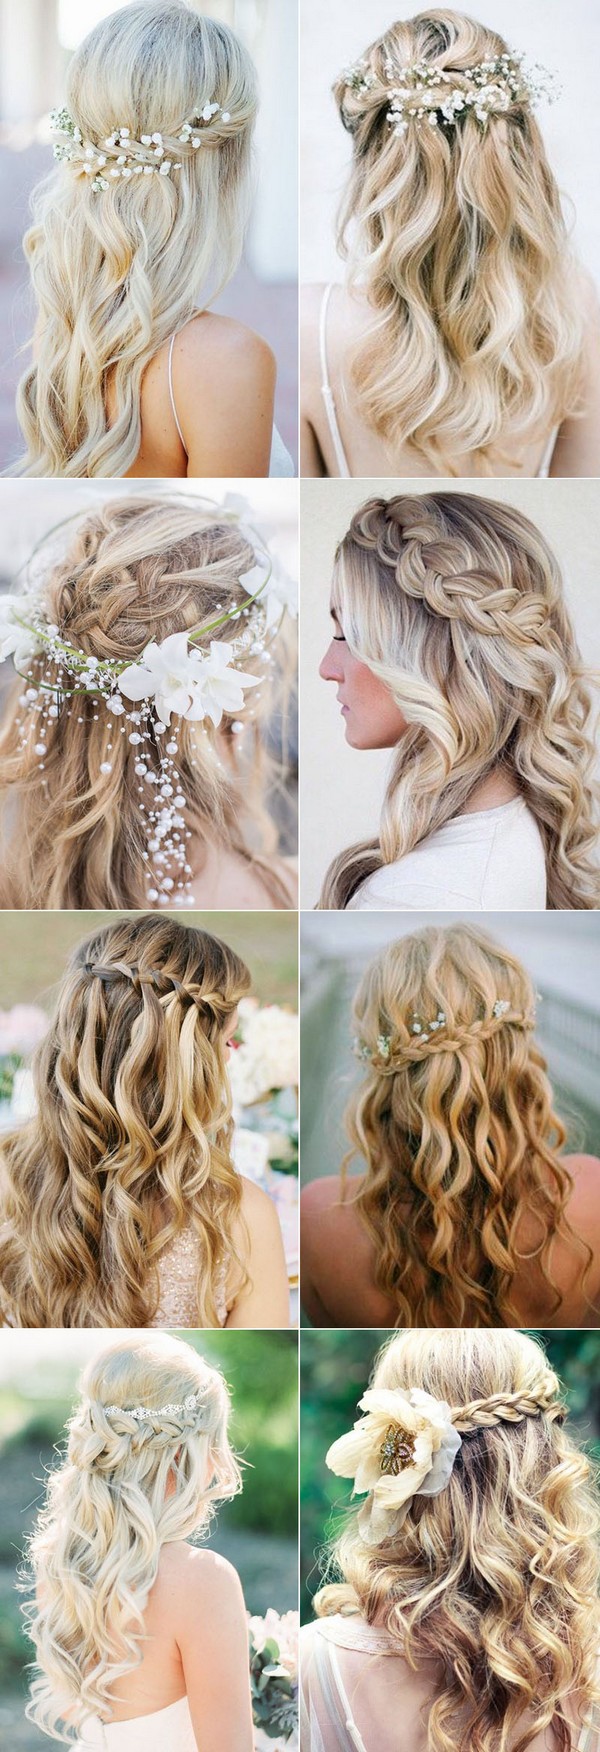 Boho long bridesmaid hair ideas soft waves beautiful waterfall braid with flower pins 2227303047